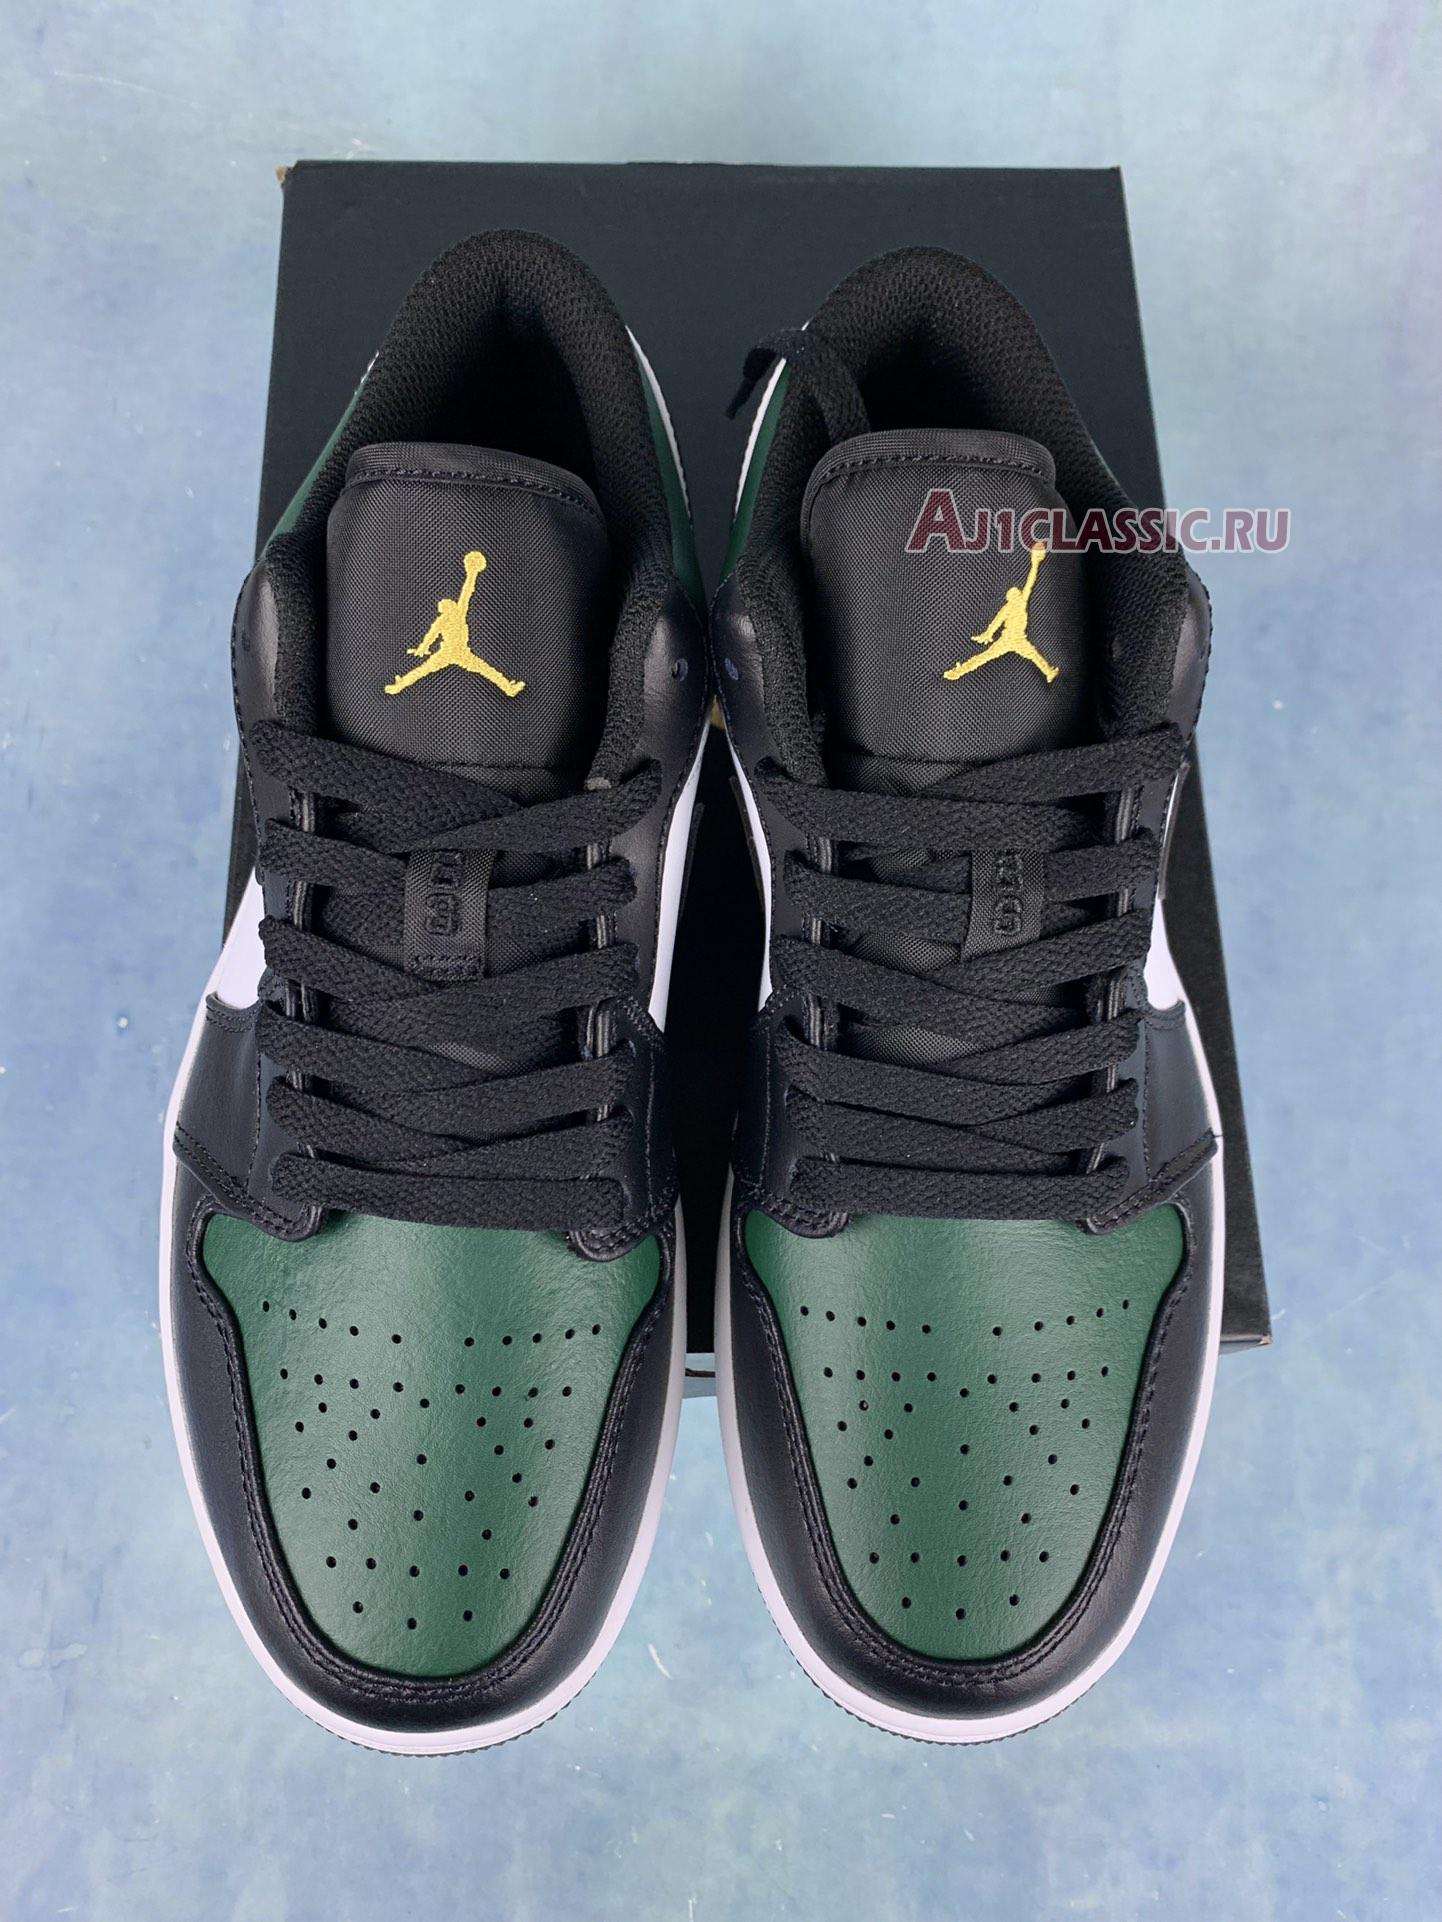 Air Jordan 1 Low "Green Toe" 553558-371-2